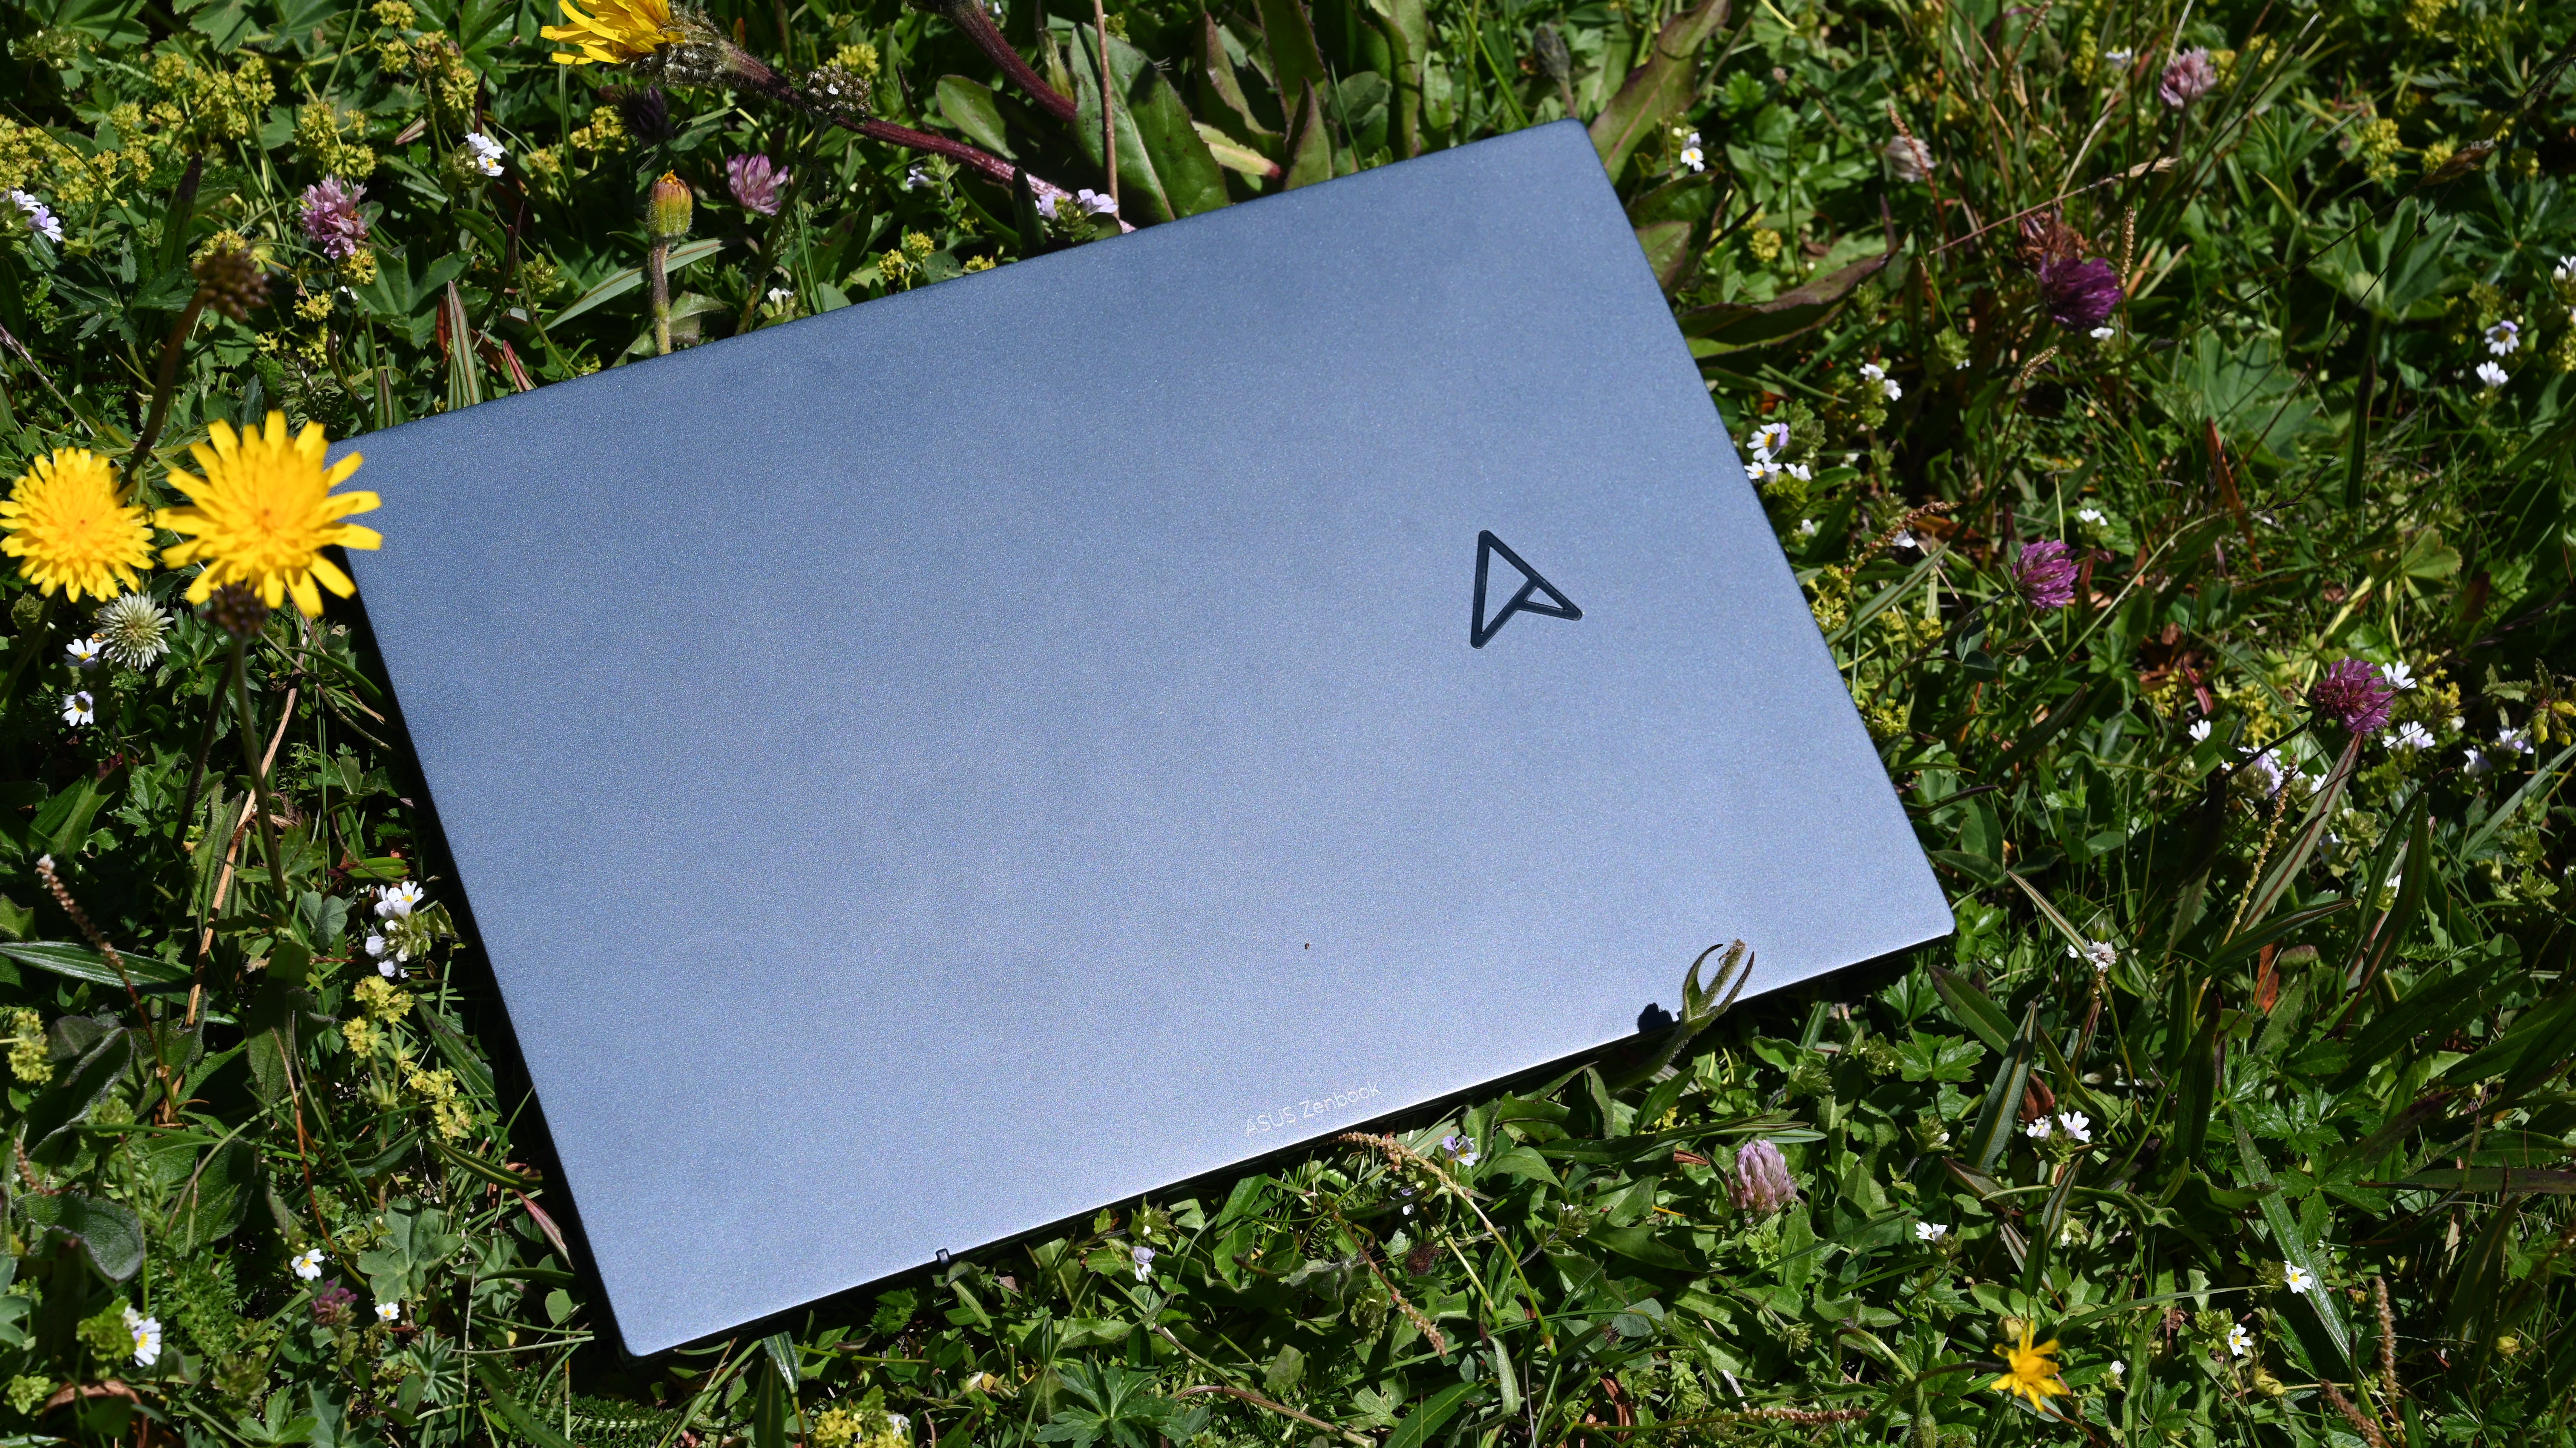 Asus Zenbook S 13 OLED (Photo: Phillip Tracy/Gizmodo)